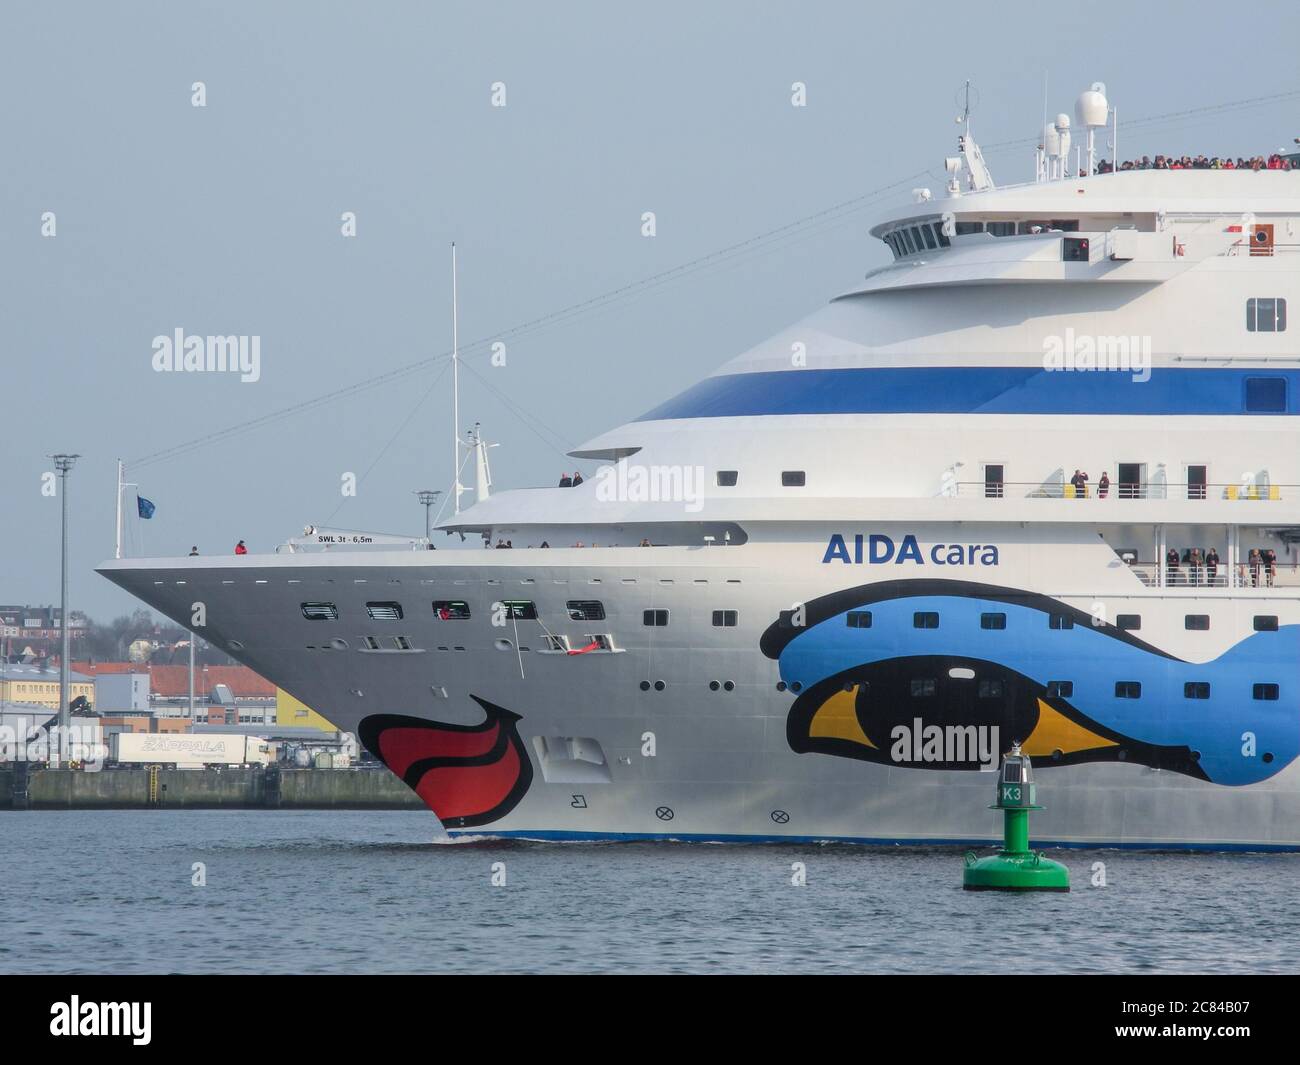 Der Bug der AIDA cara am Ostseekai in Kiel Foto Stock